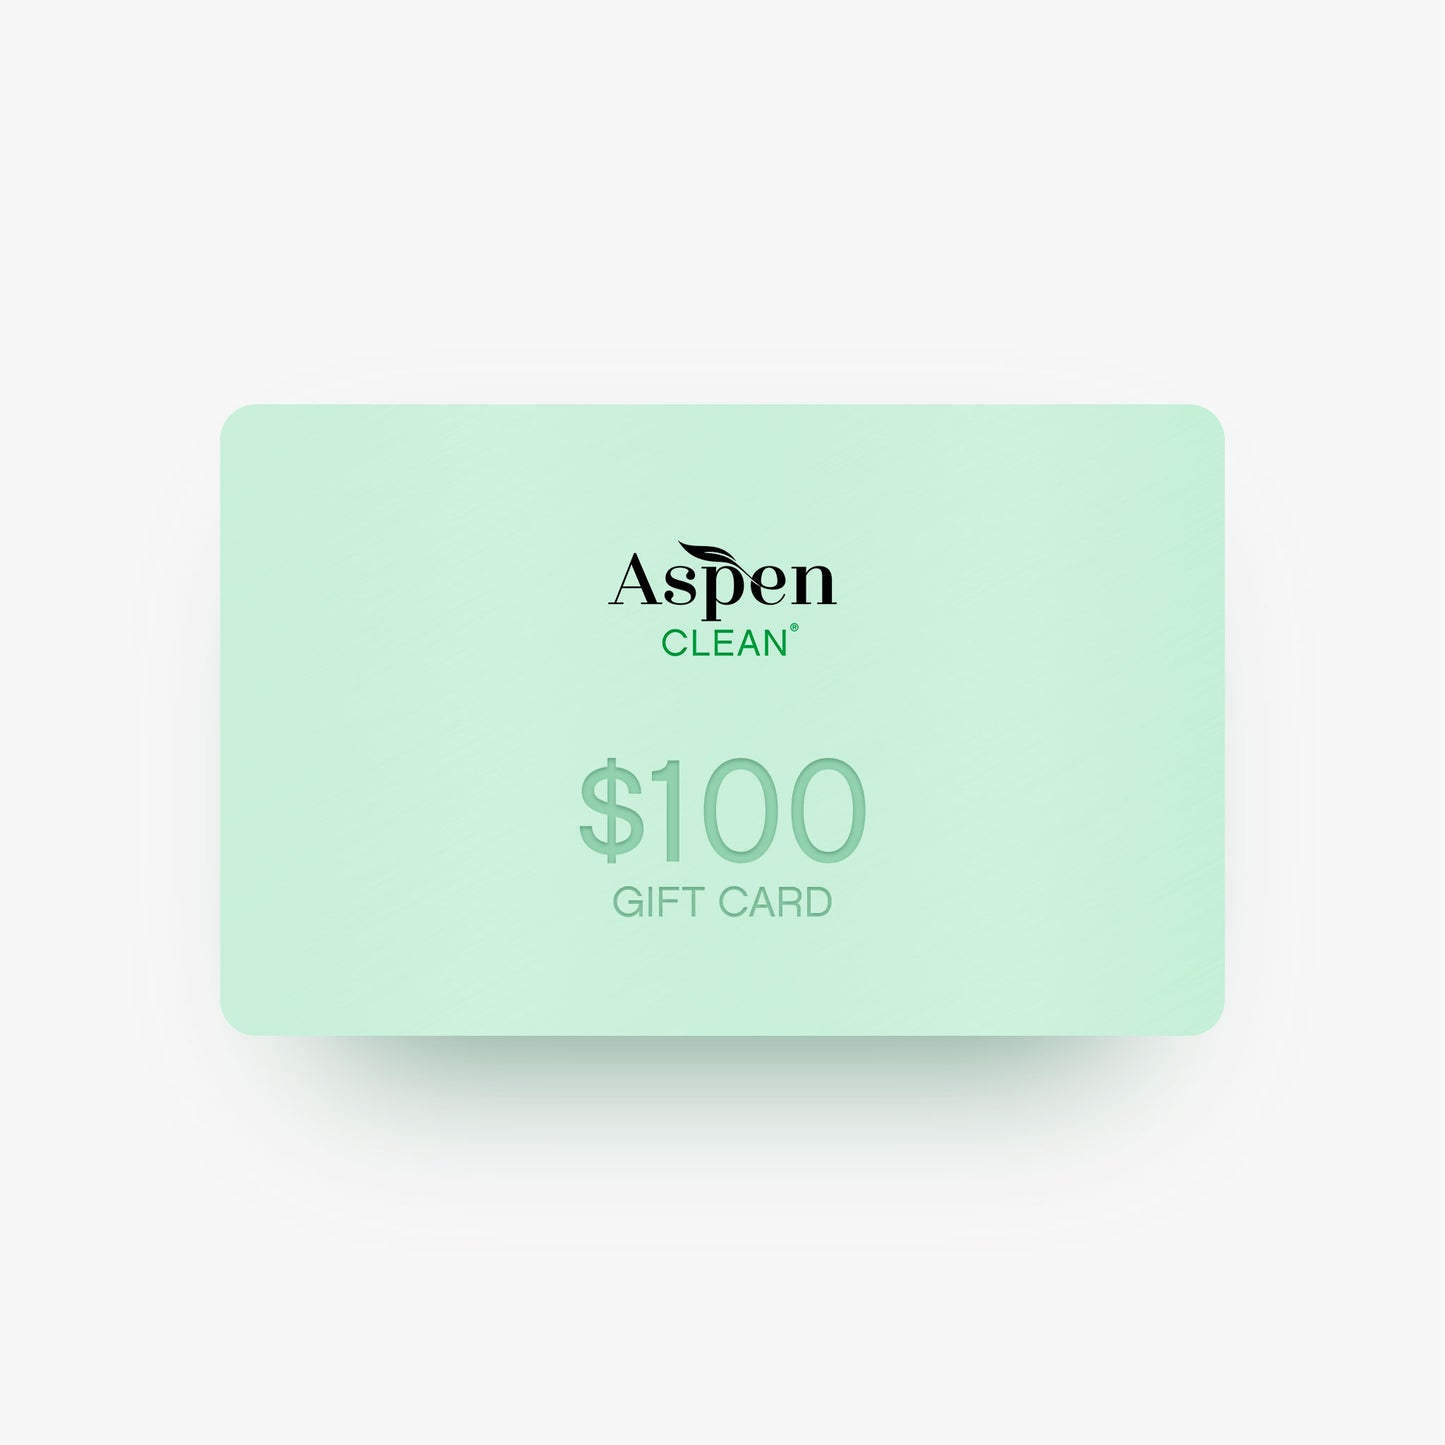 AspenClean e-gift card $100